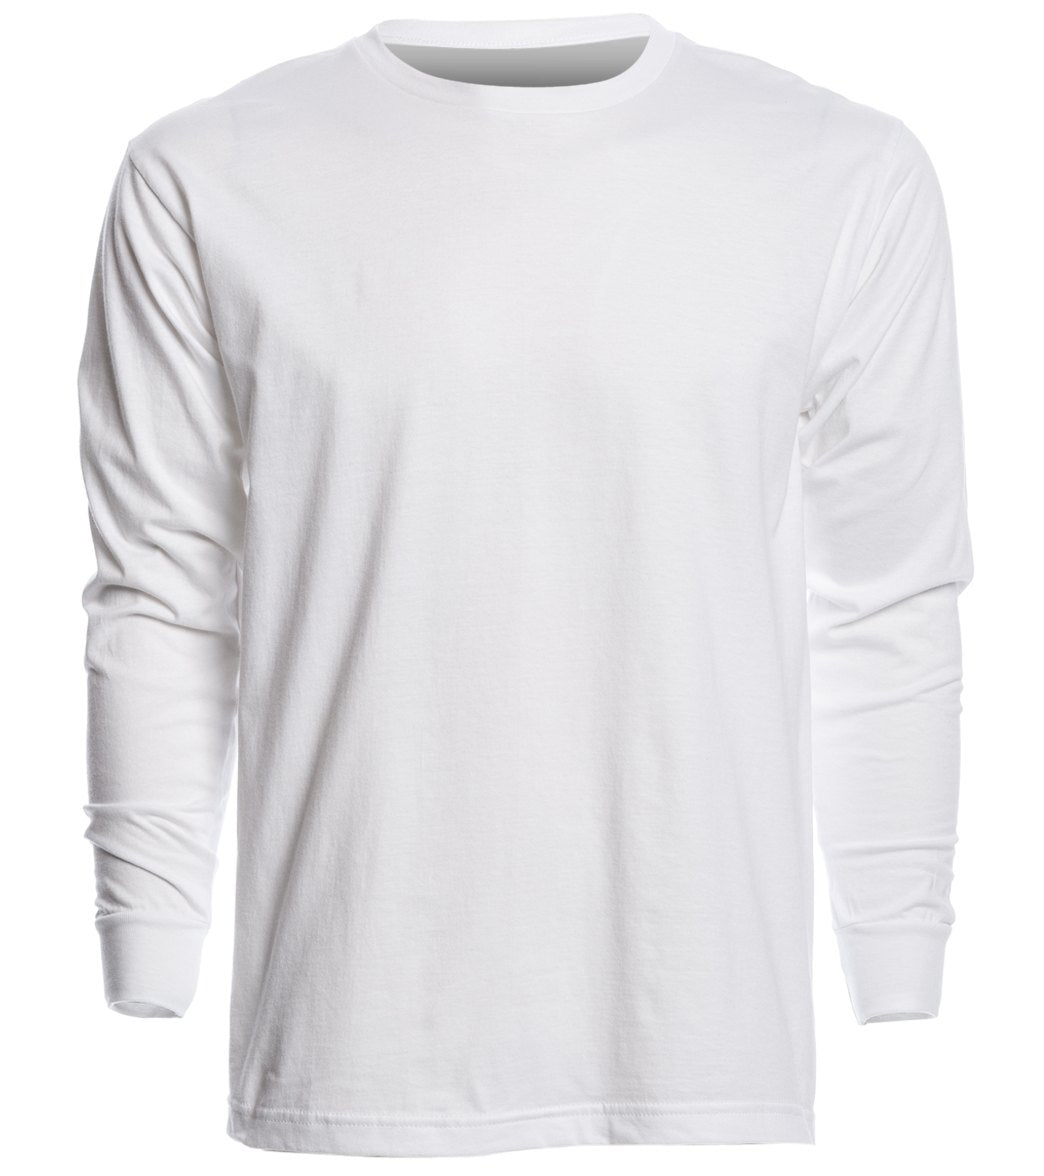 Men's Long Sleeve Crew/Cuff Shirt - White Xl Cotton/Polyester - Swimoutlet.com